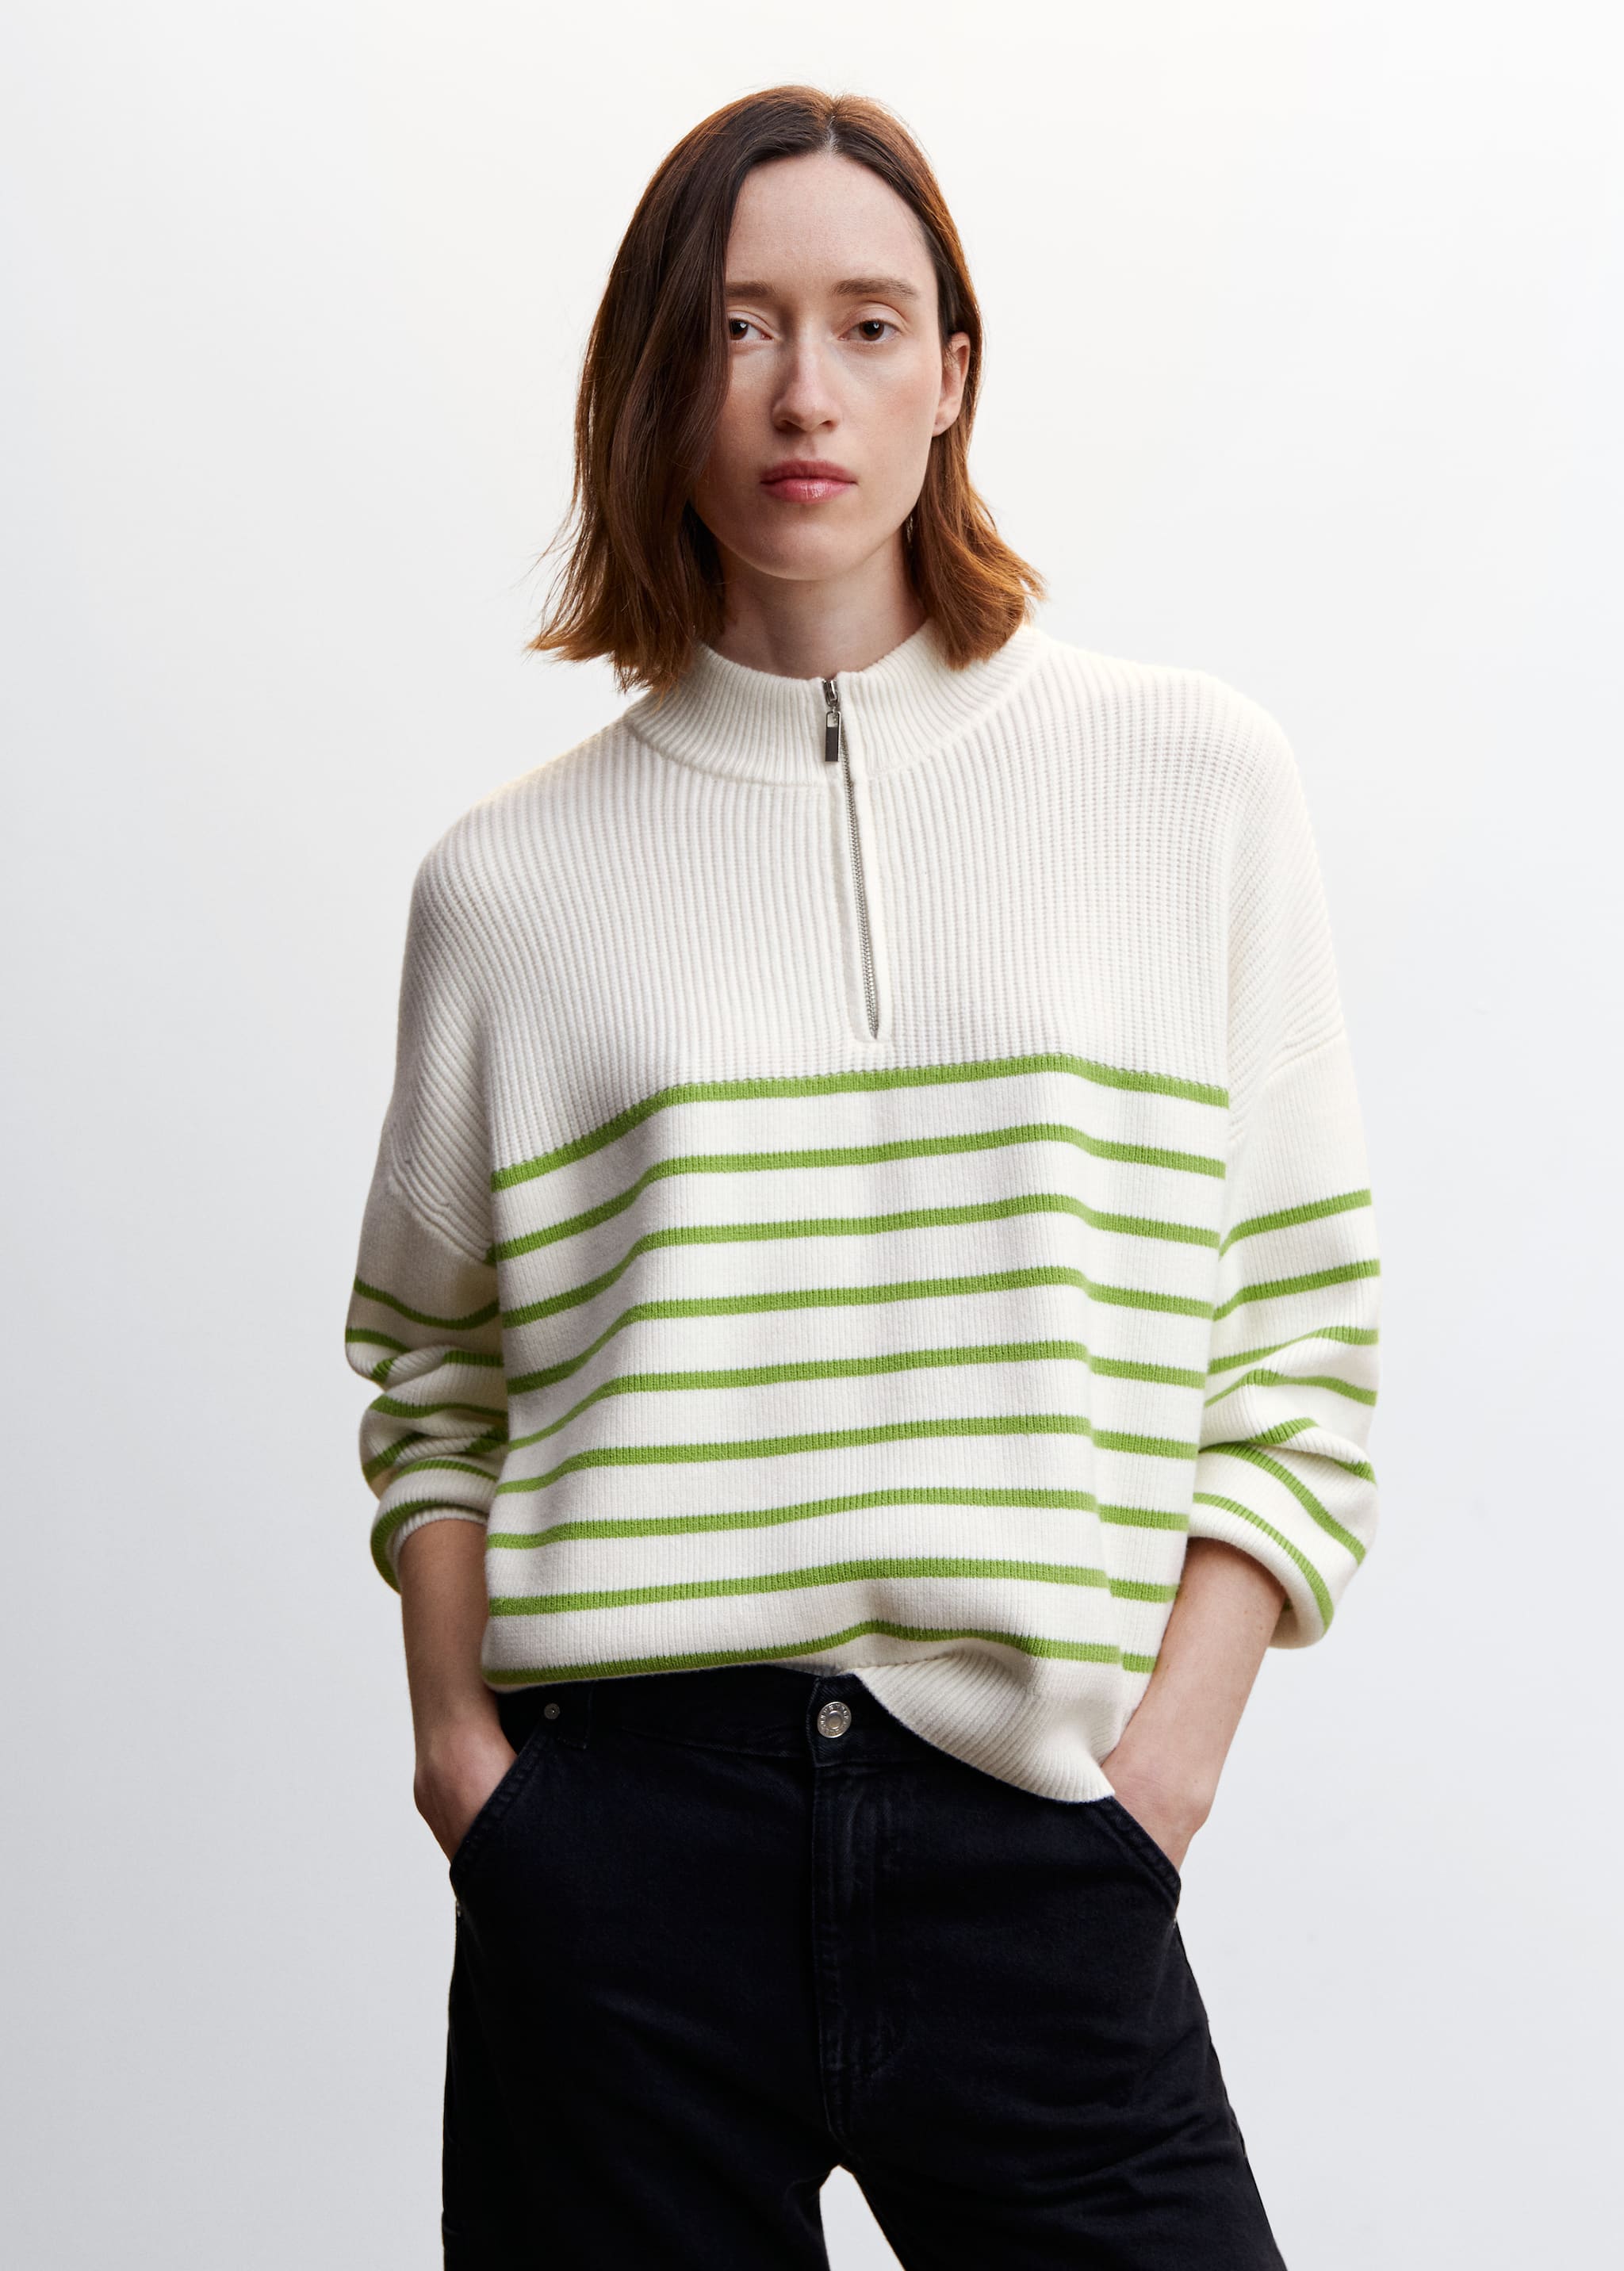 Striped sweater with zip - Medium plane